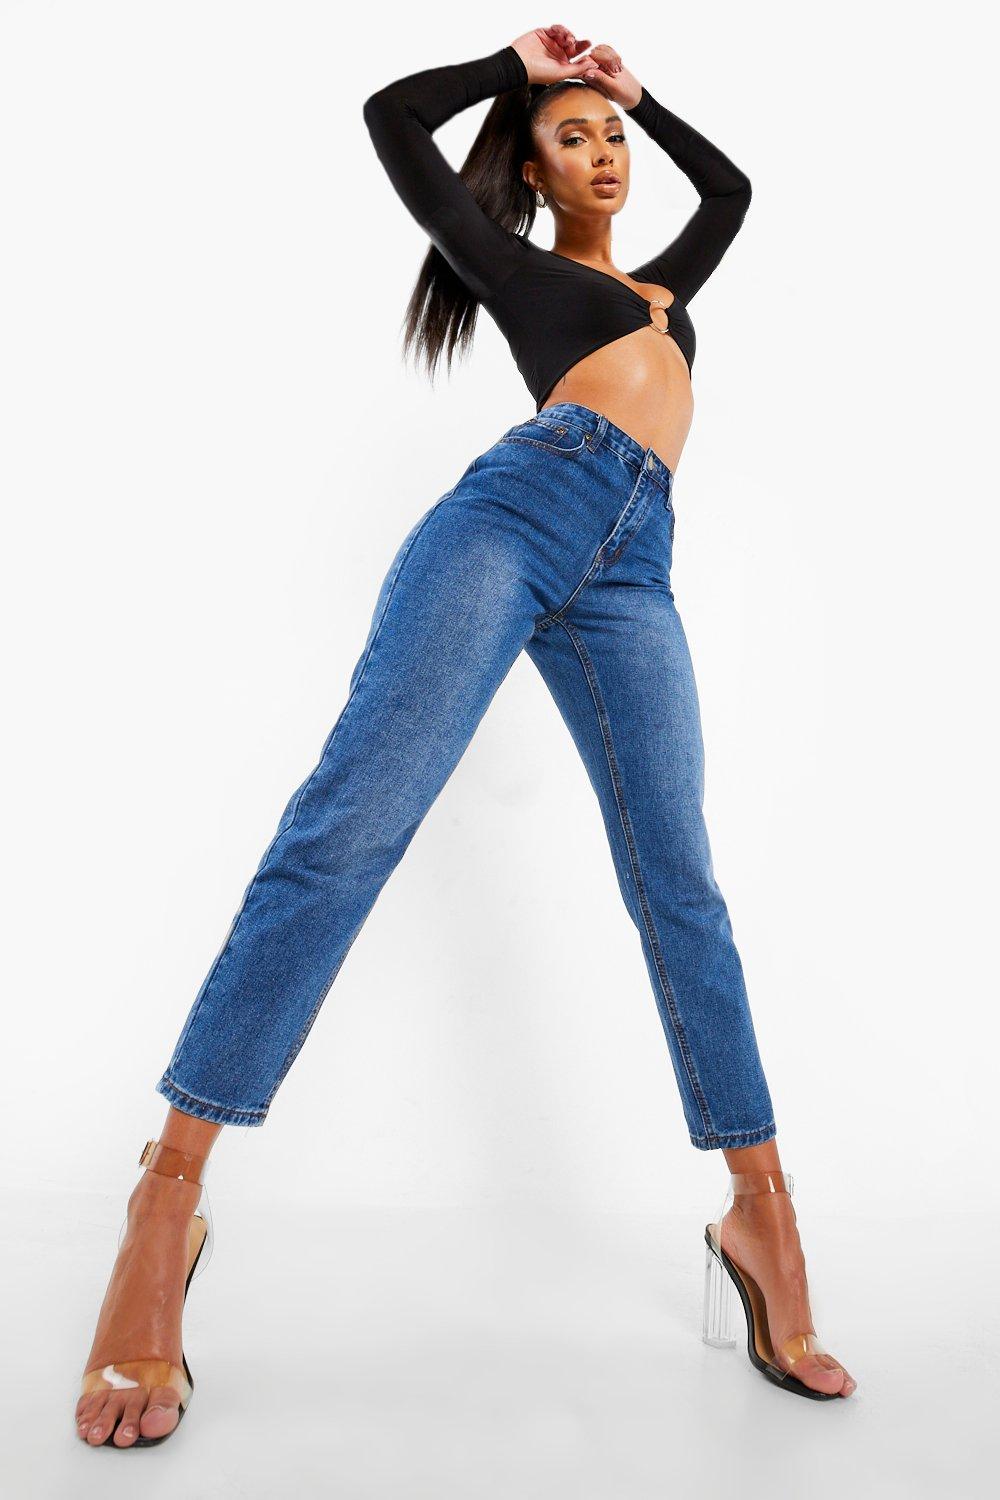 womens white jeans straight leg